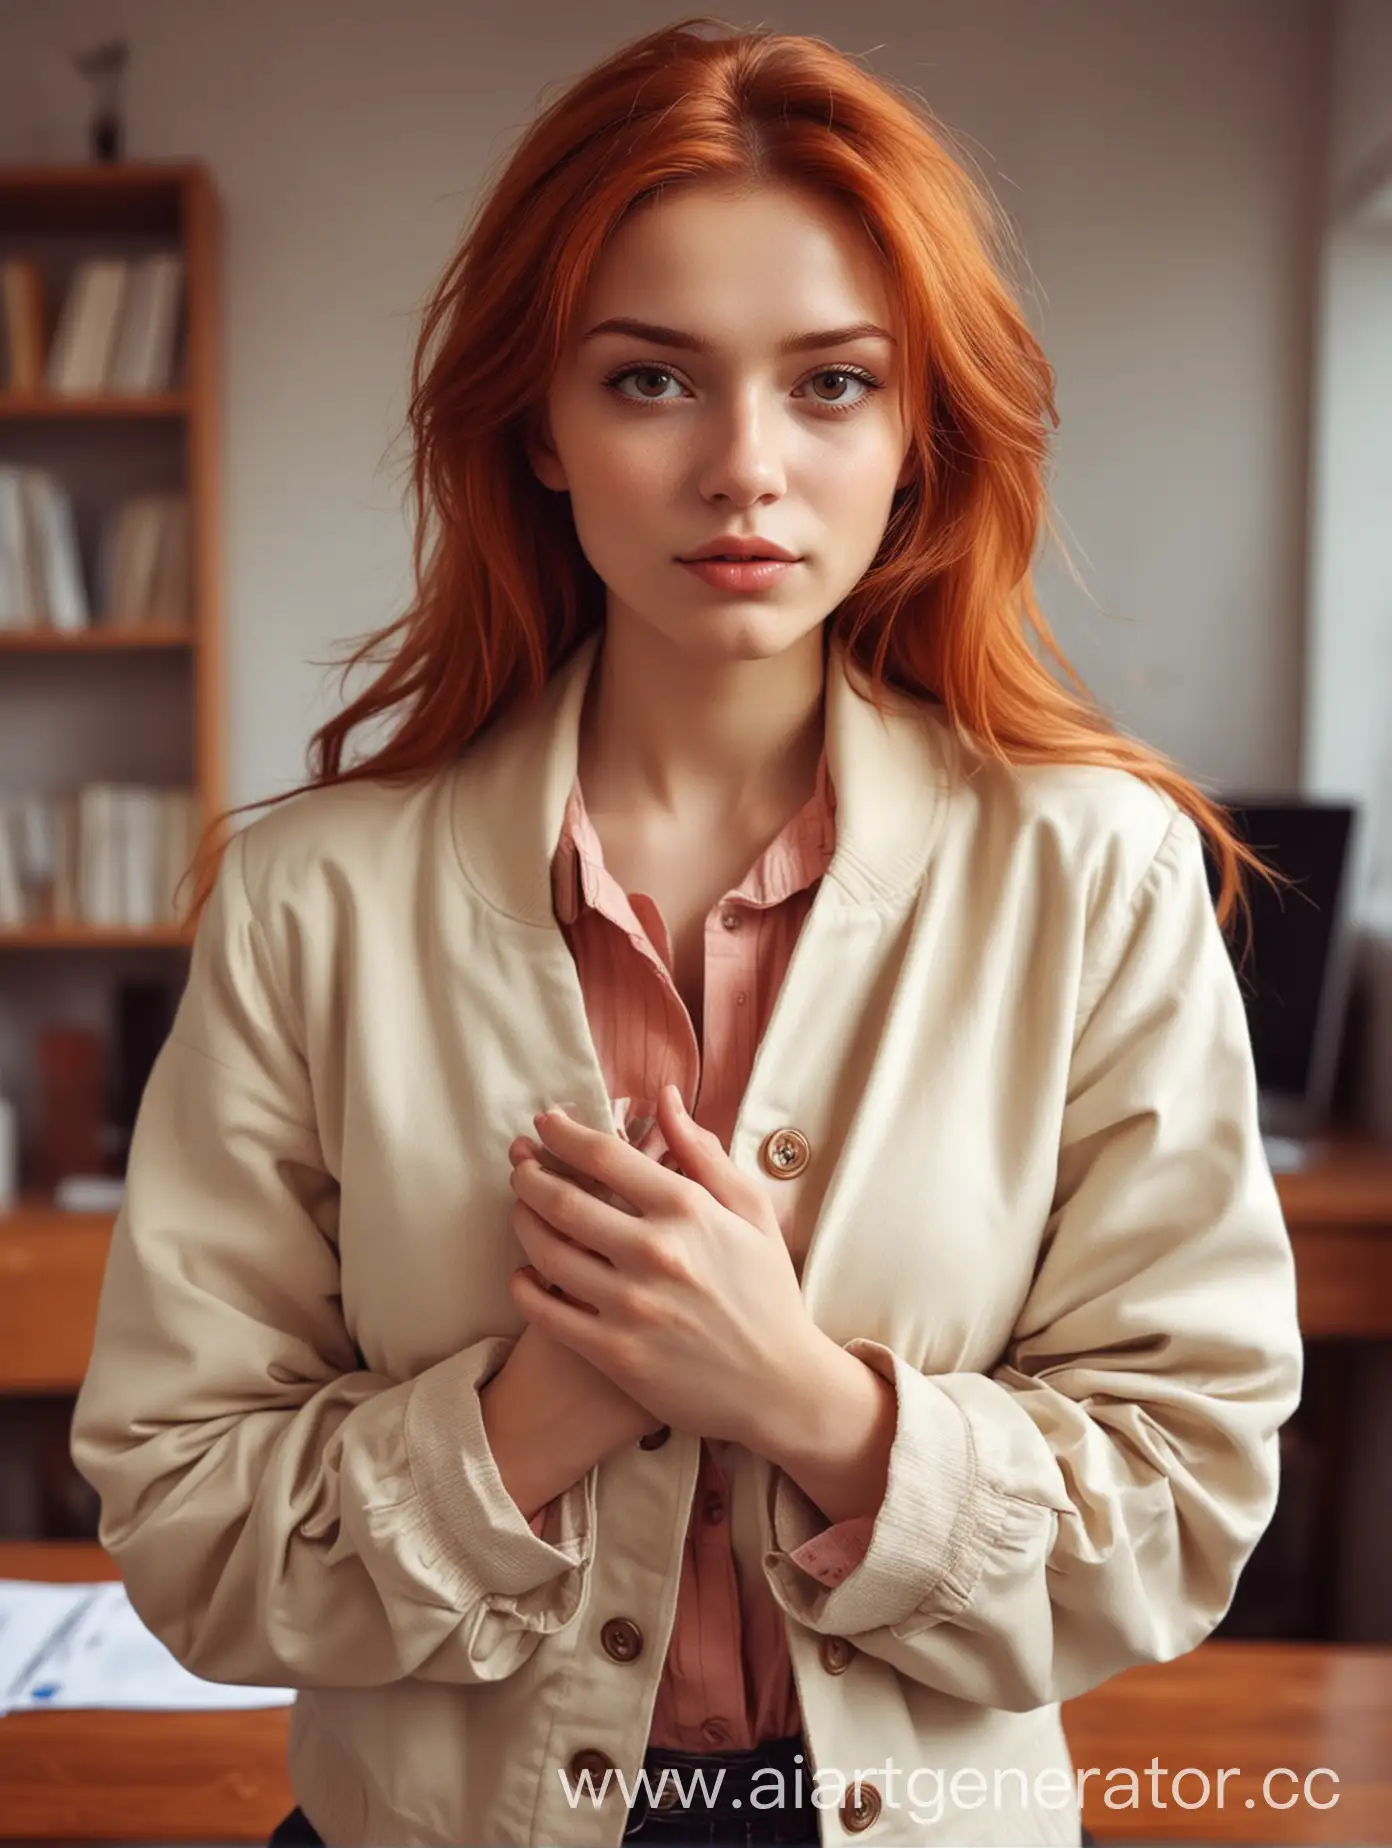 Slavic-Girl-in-MilkColored-Jacket-Standing-in-Cozy-Office-with-Crossed-Hands